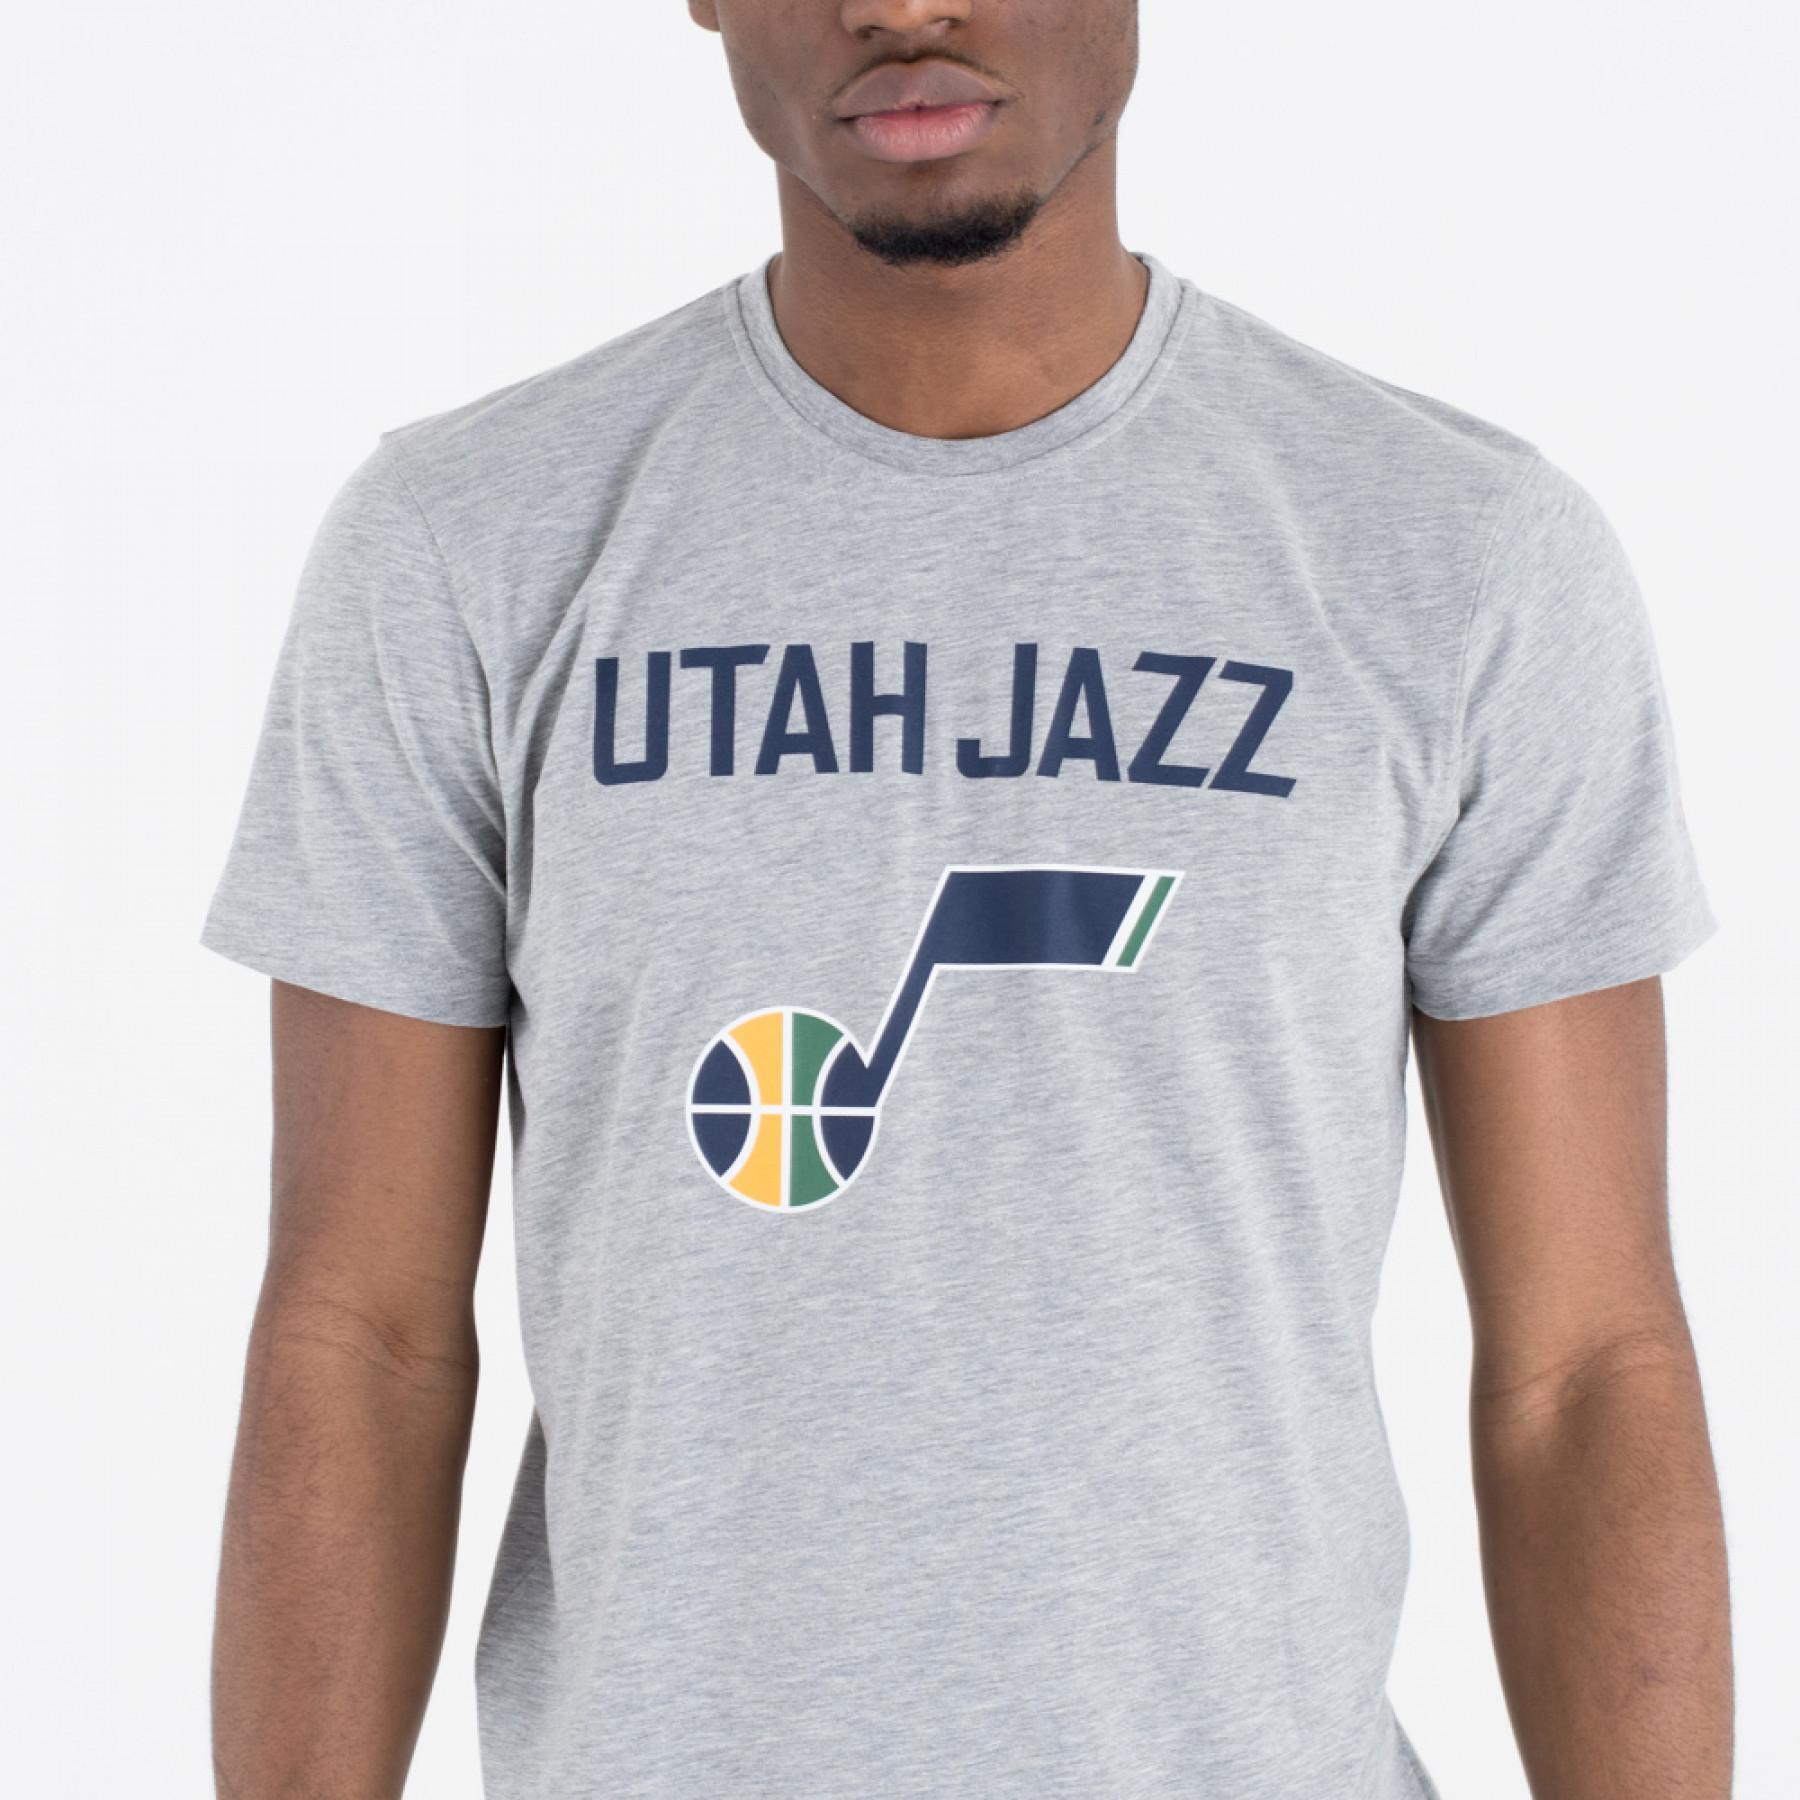  New EraT - s h i r t   logo Utah Jazz